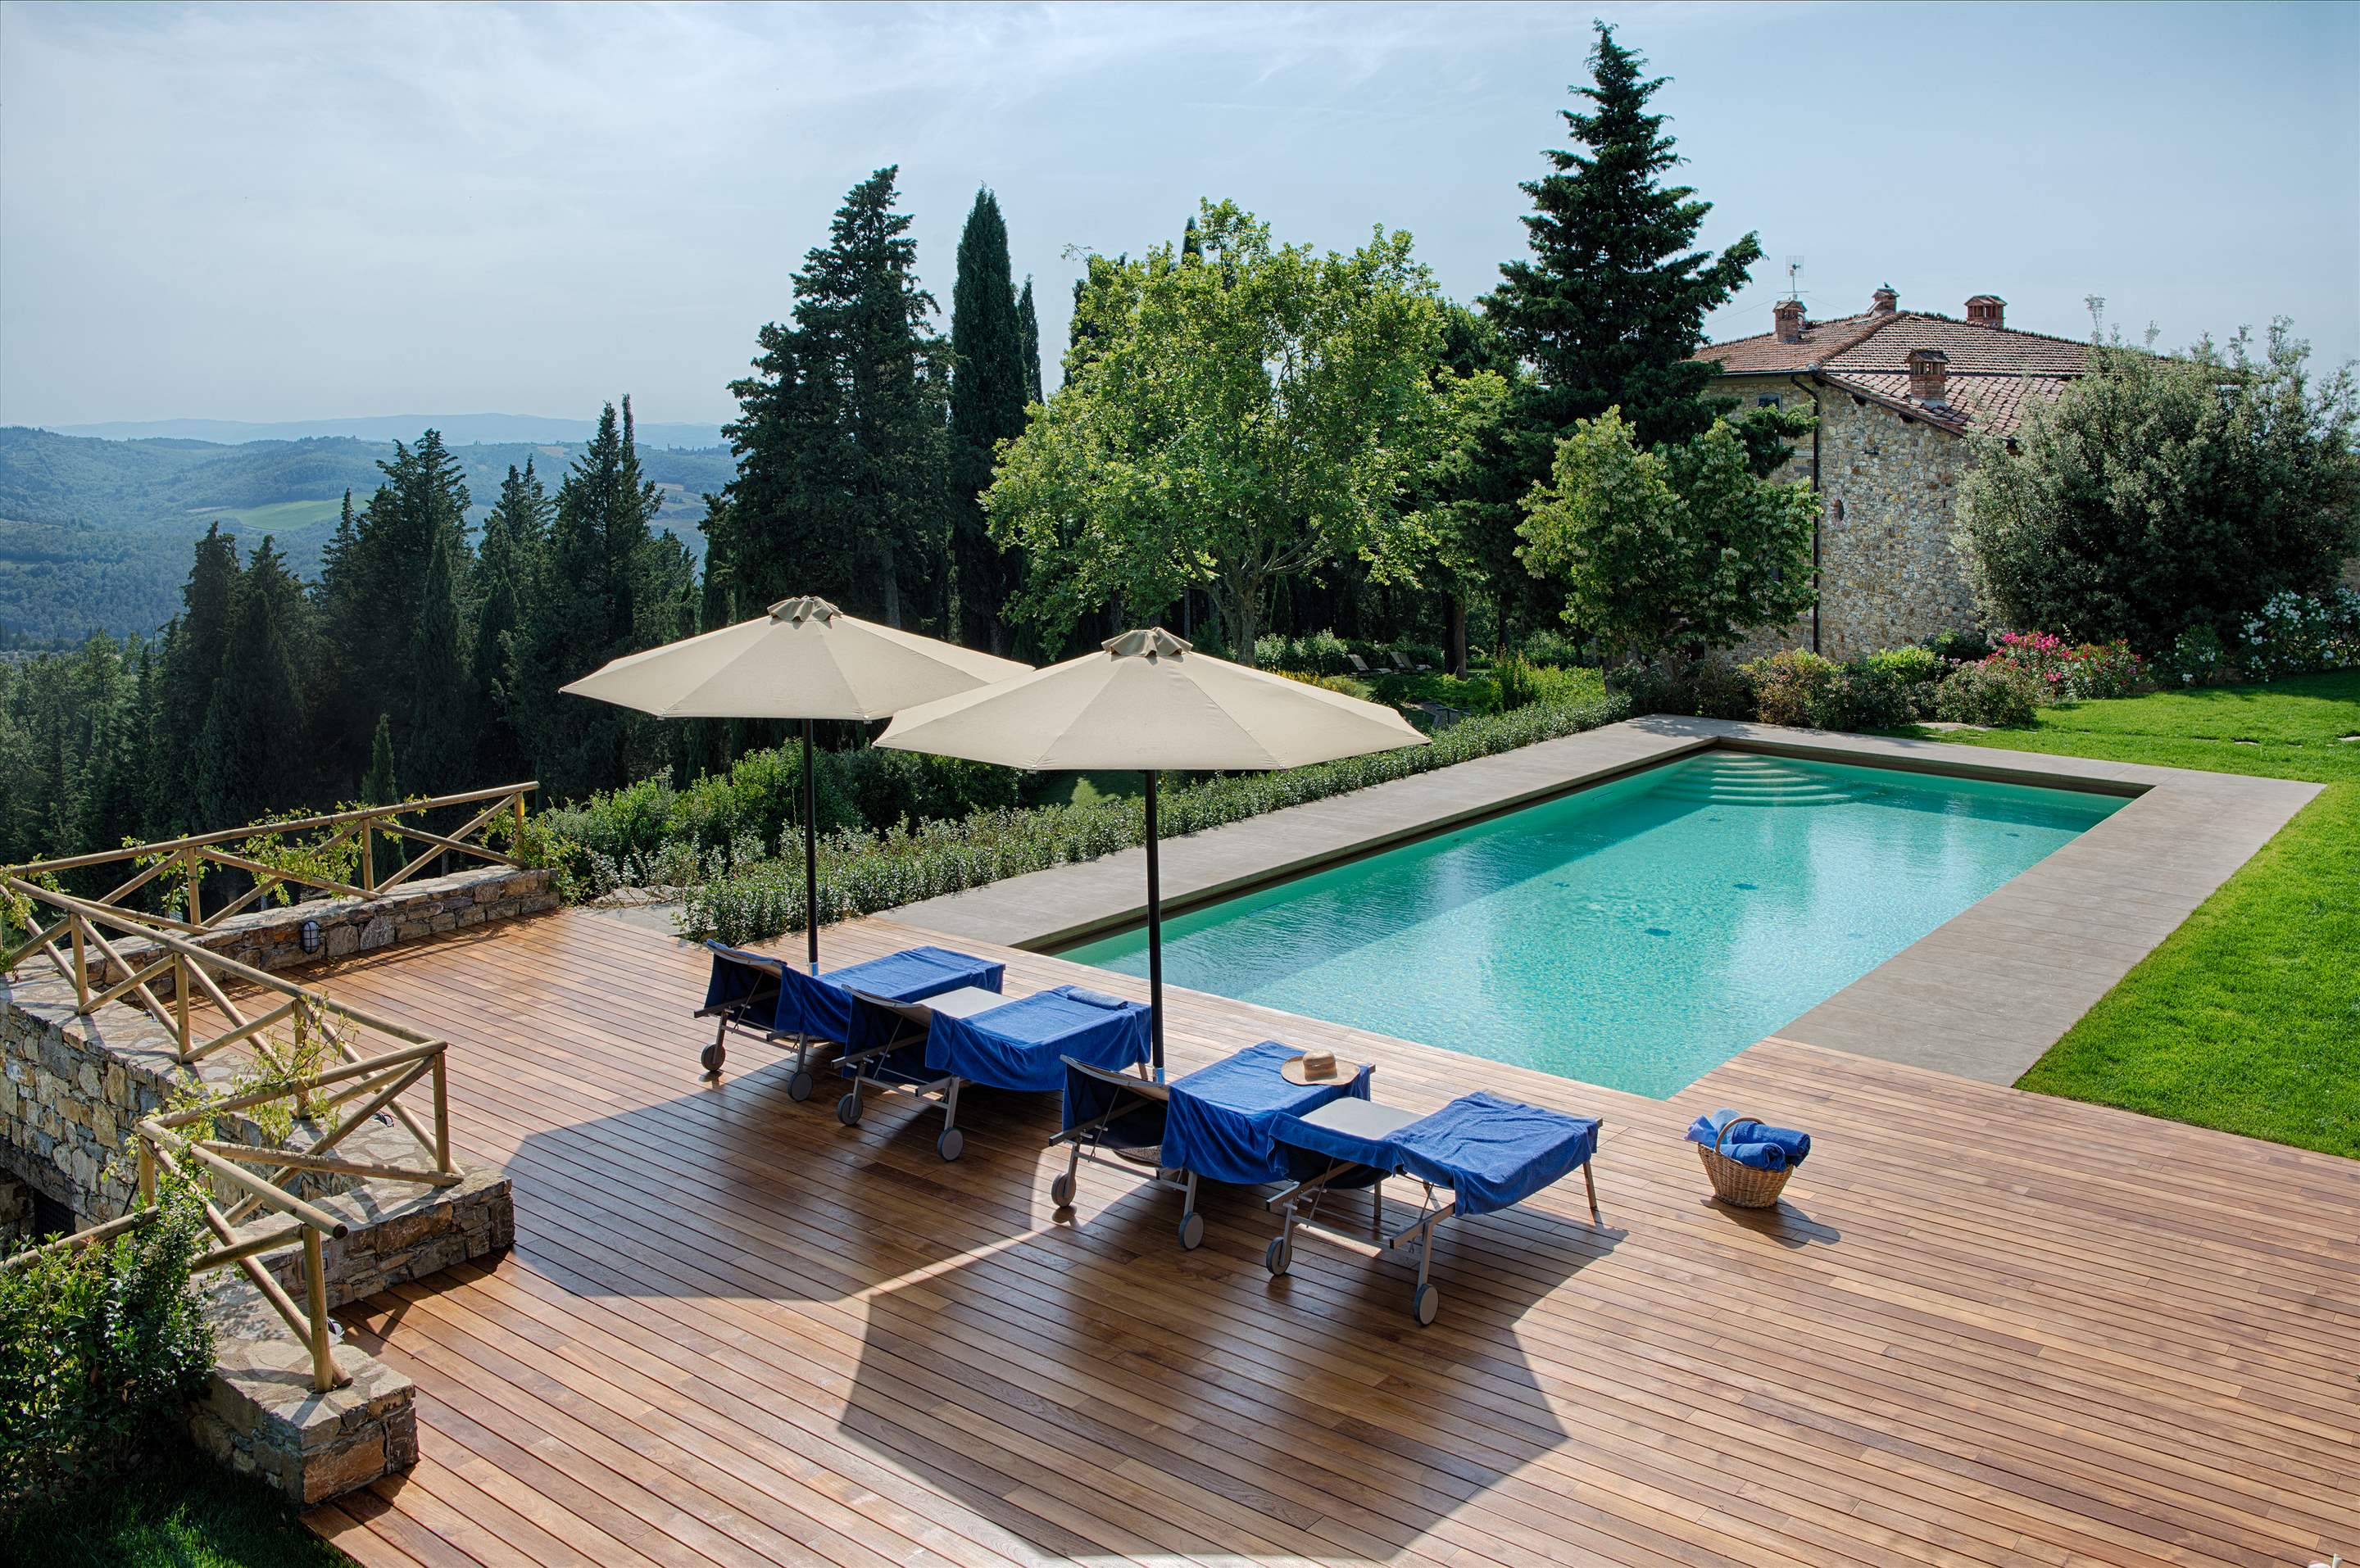 Villa La Valetta, Apt Uva + 1 Bedroom, 2 bedroom villa in Chianti & Countryside, Tuscany Photo #1